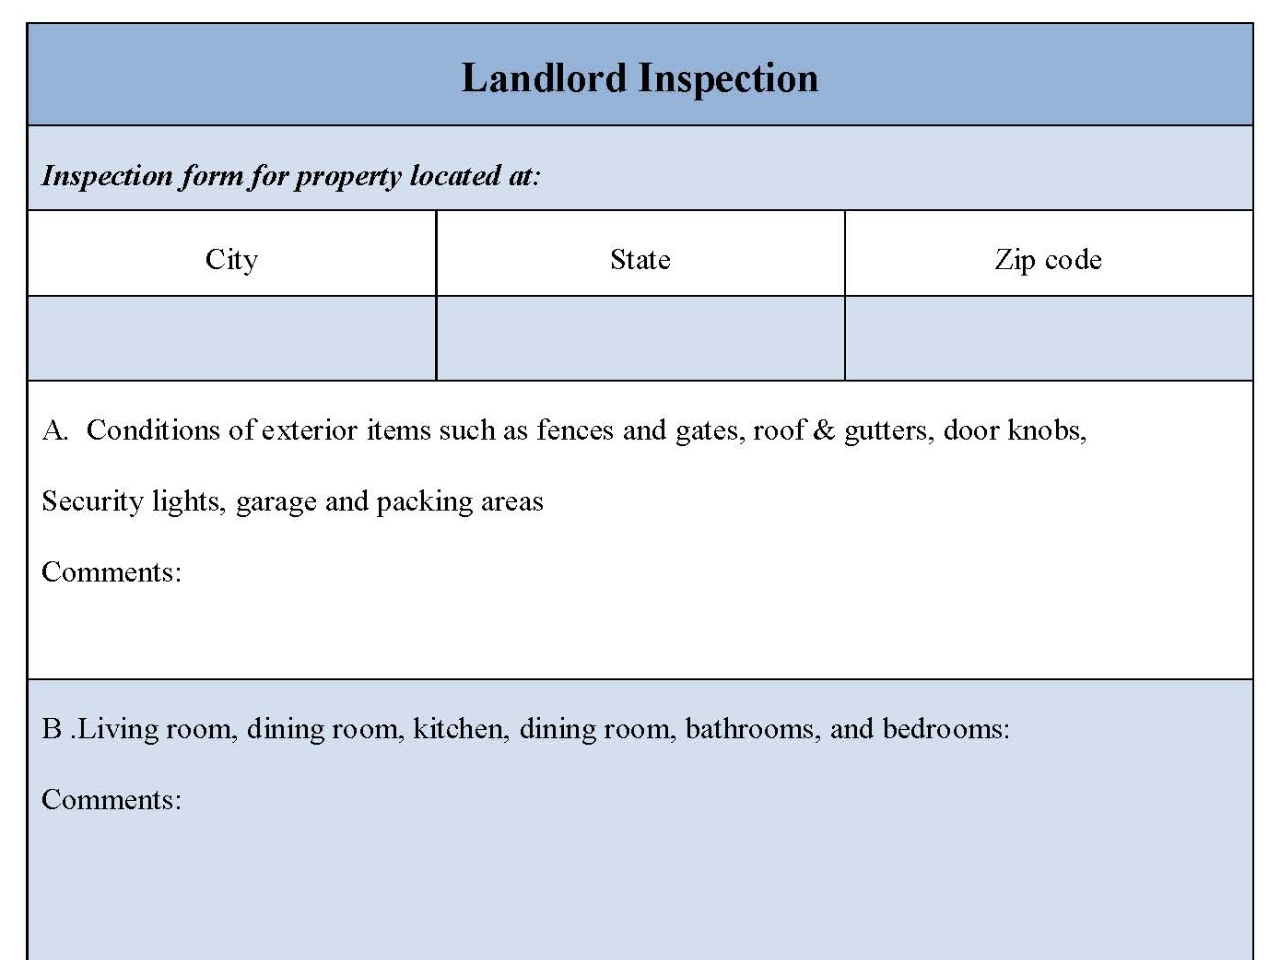 Landlord Inspection Form